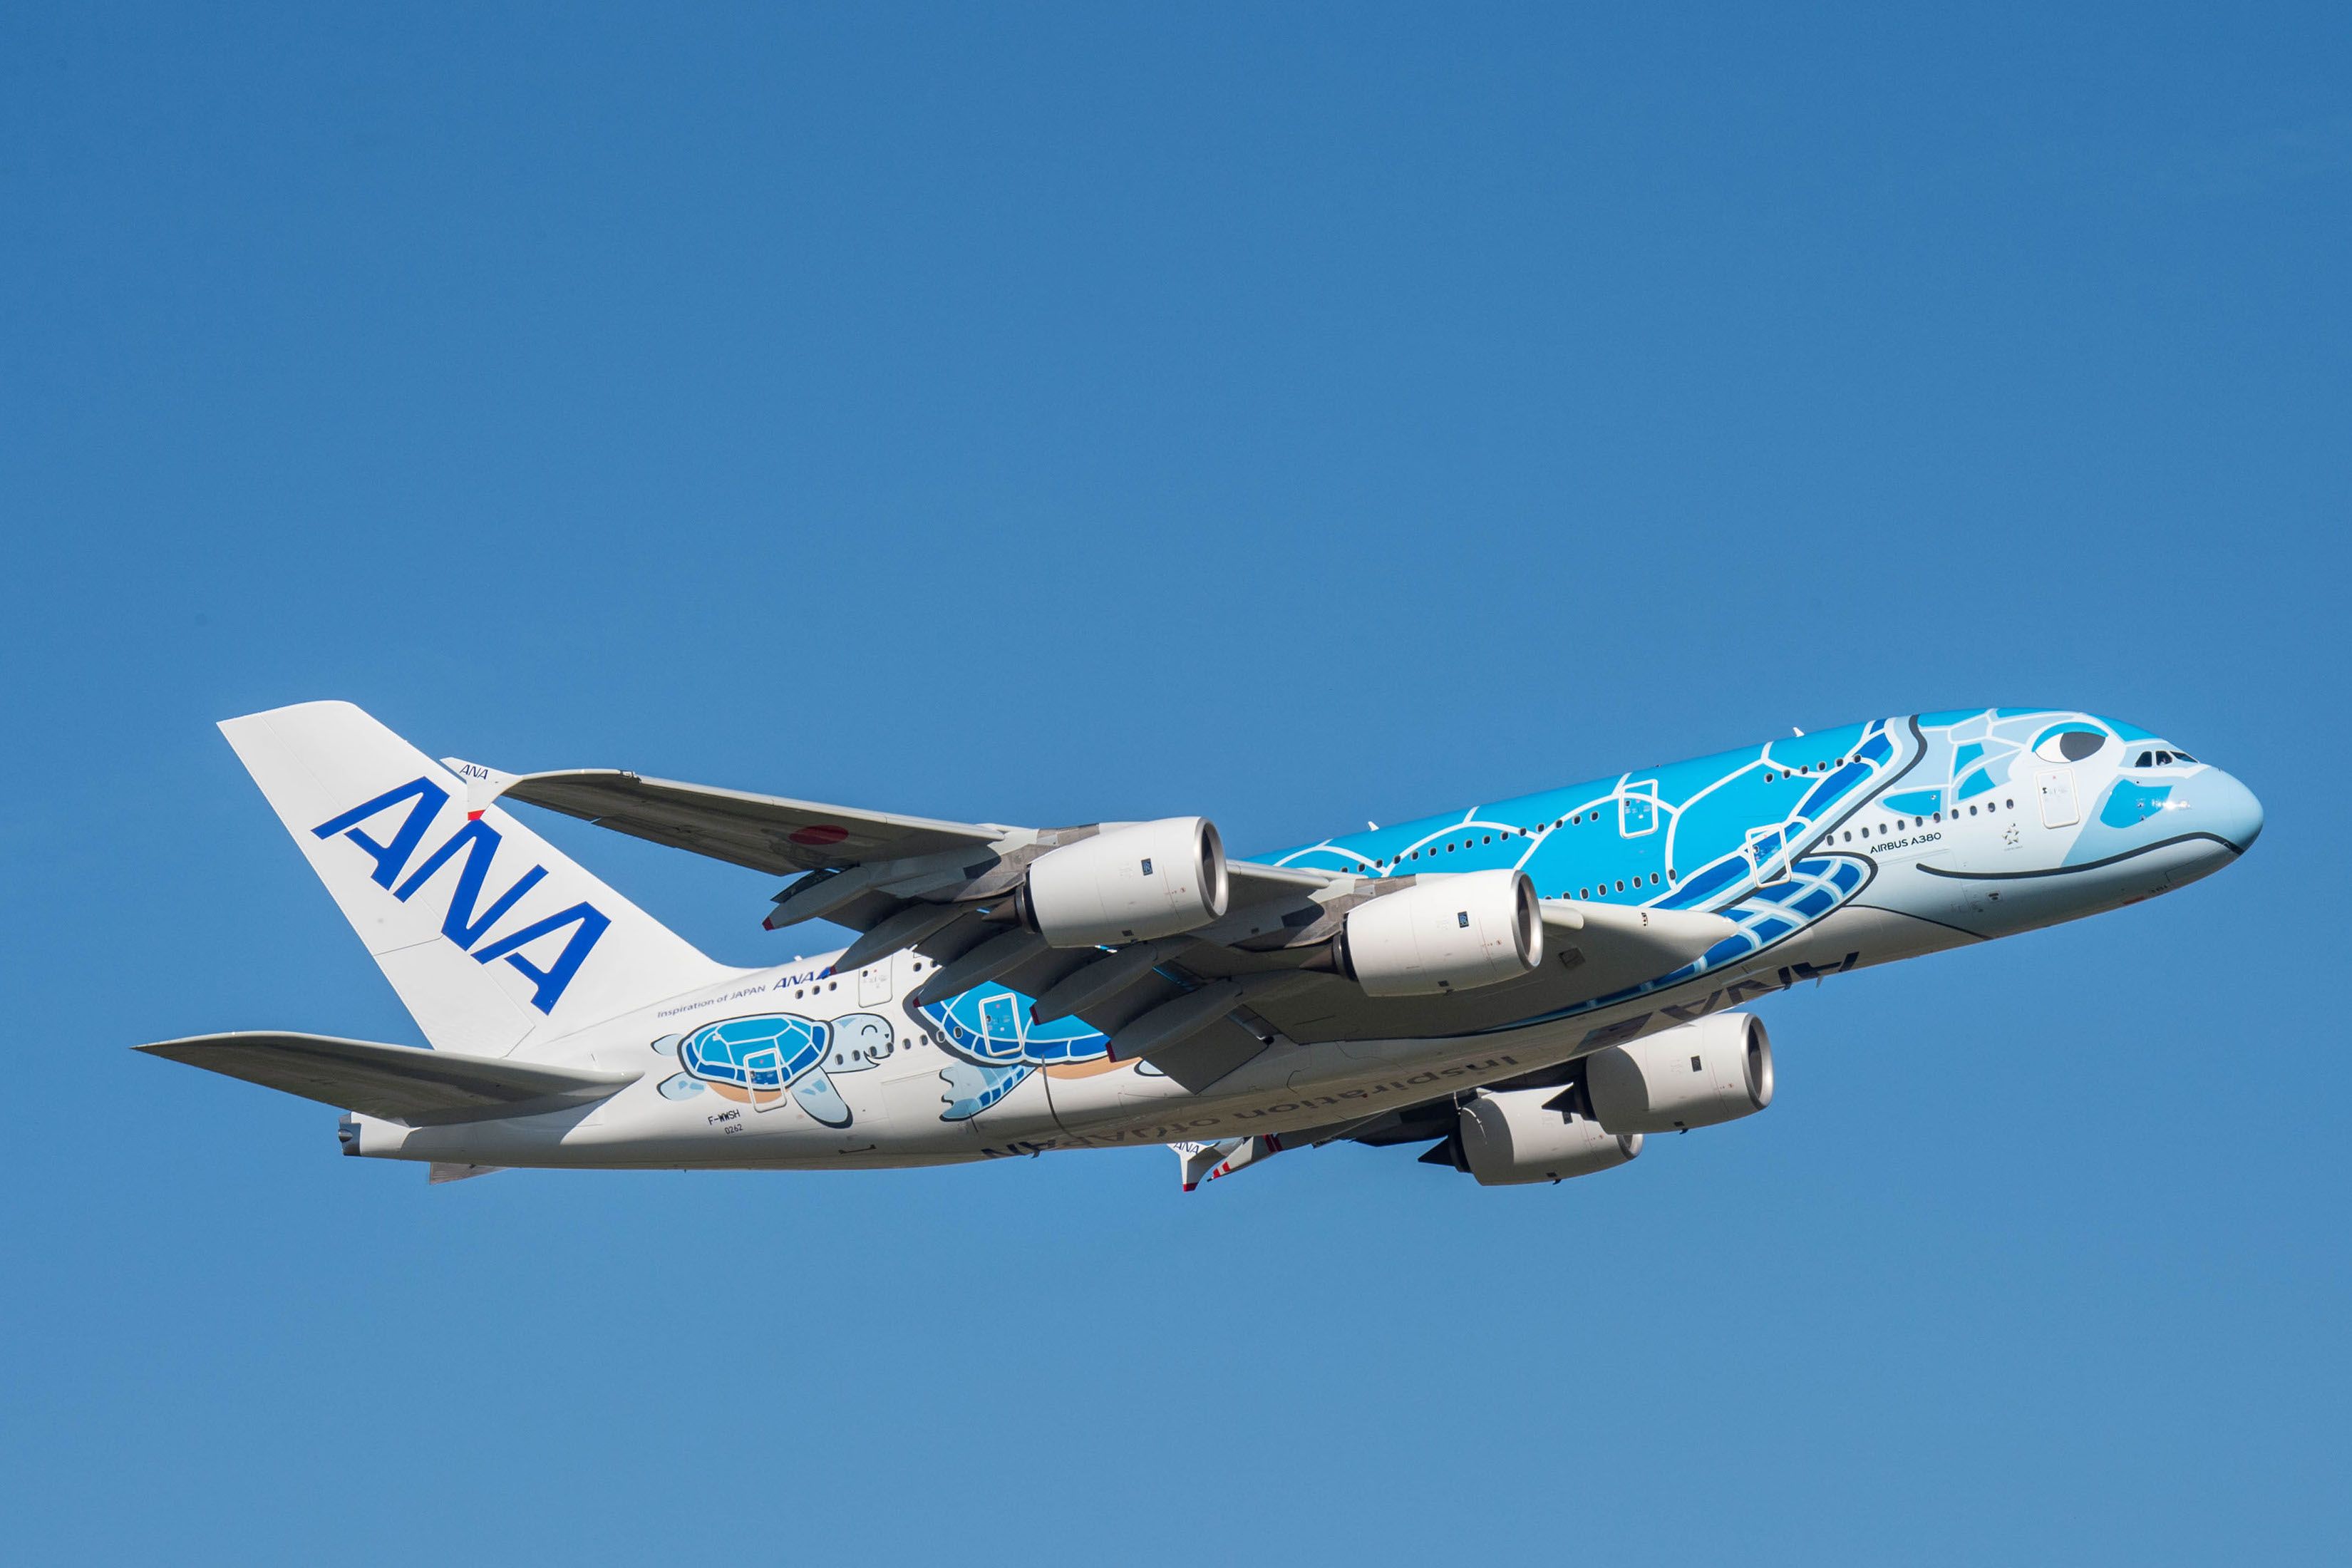 An ANA Airbus A380 Flying Honu against a blue sky.